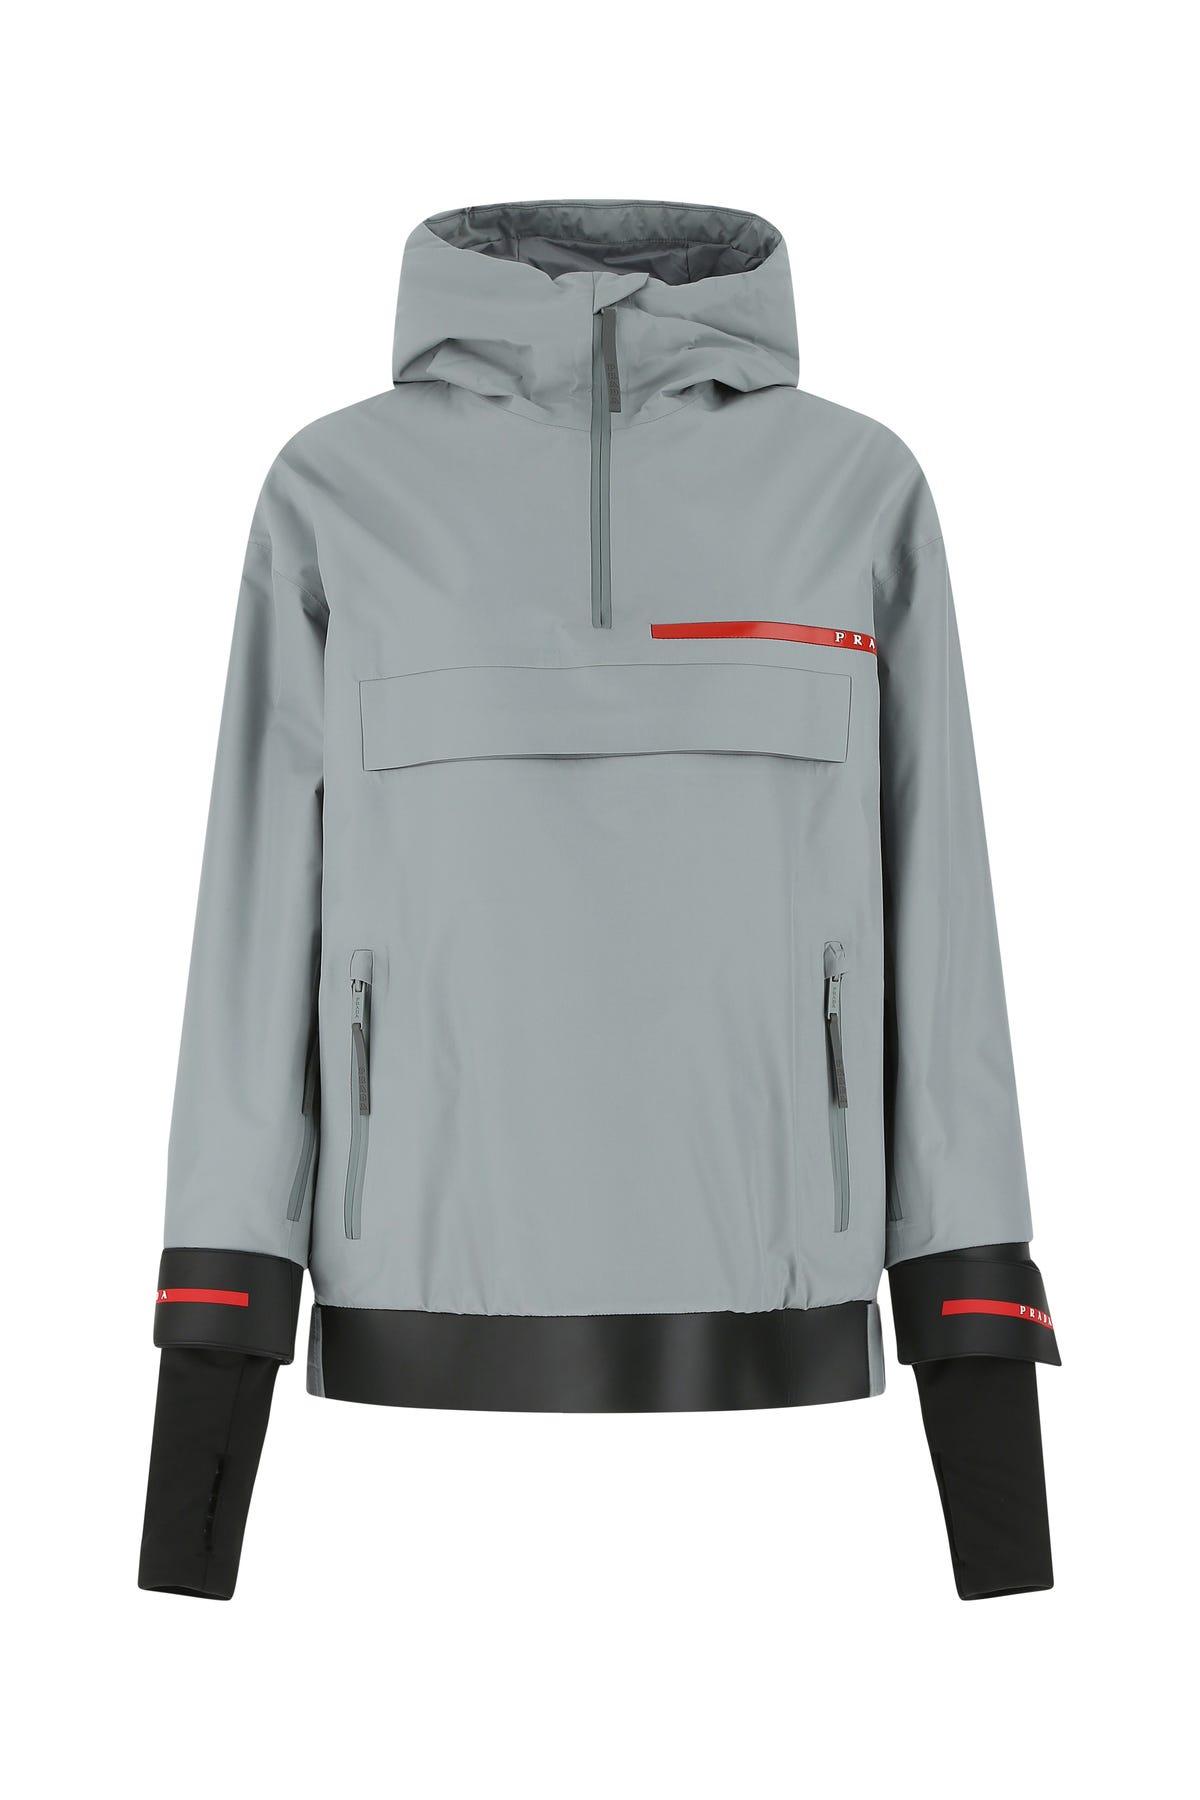 Prada Grey Gore-tex® Padded Jacket in Gray | Lyst